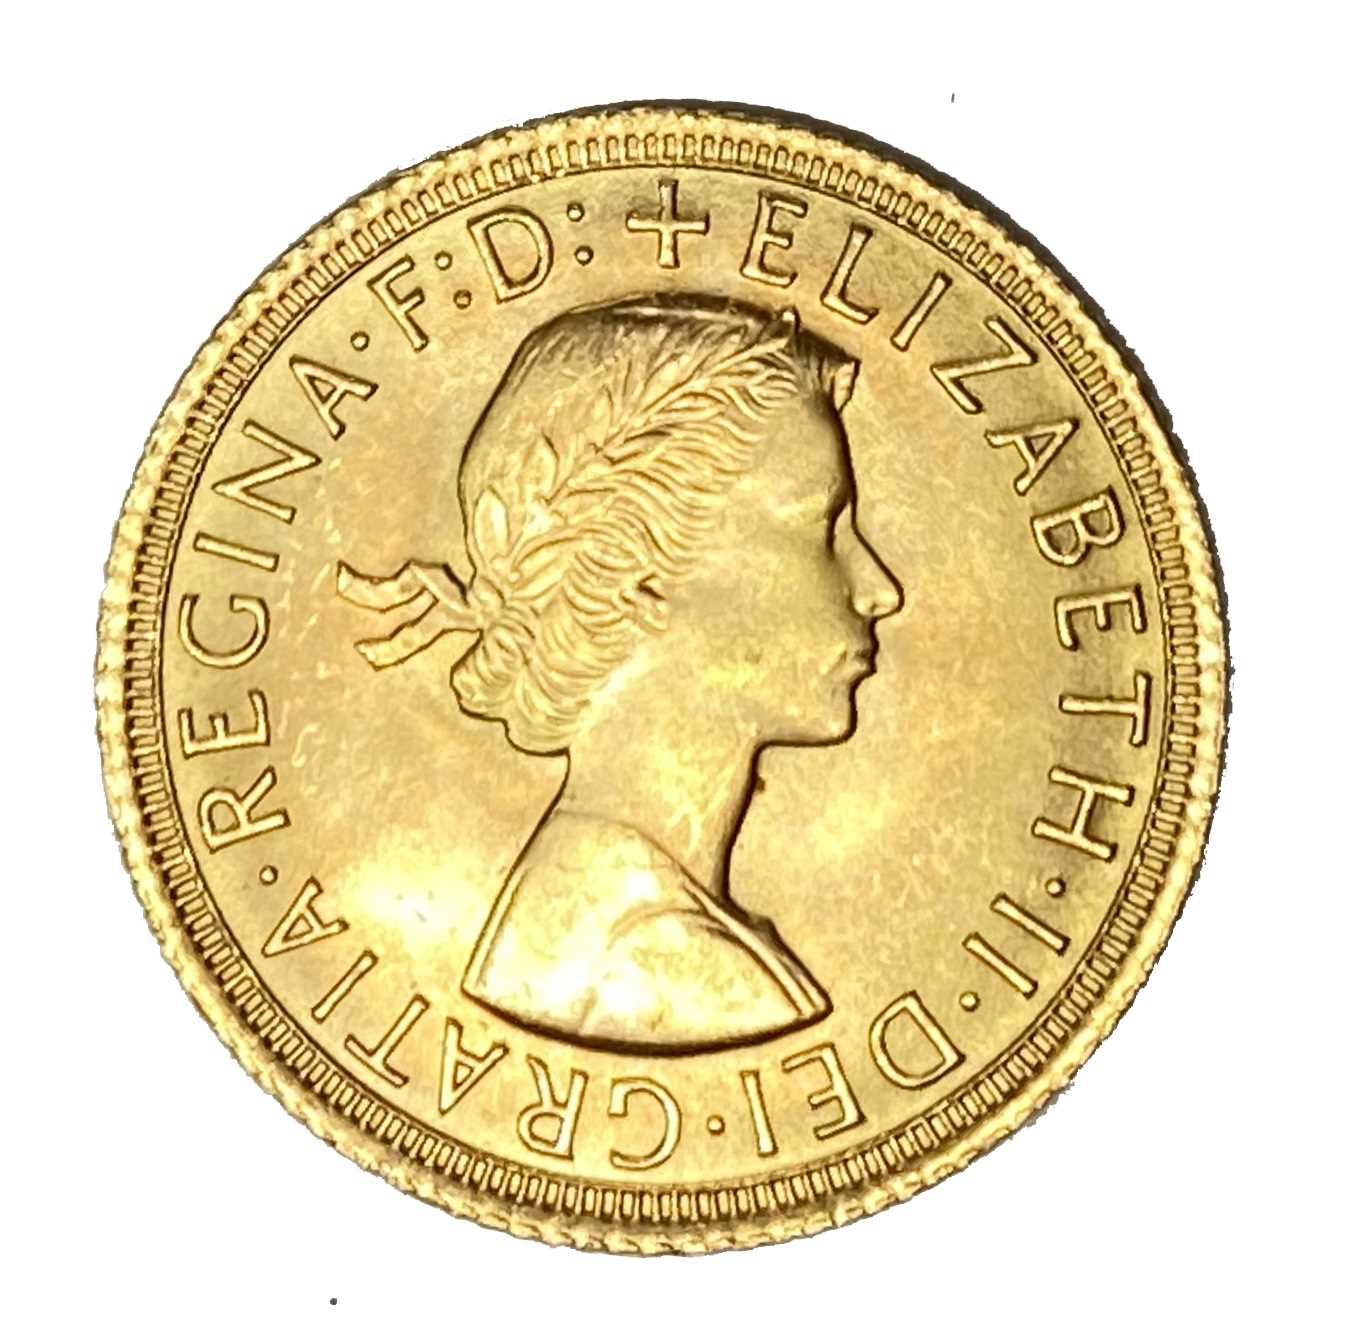 Lot 65 - Elizabeth II gold Sovereign coin, 1965